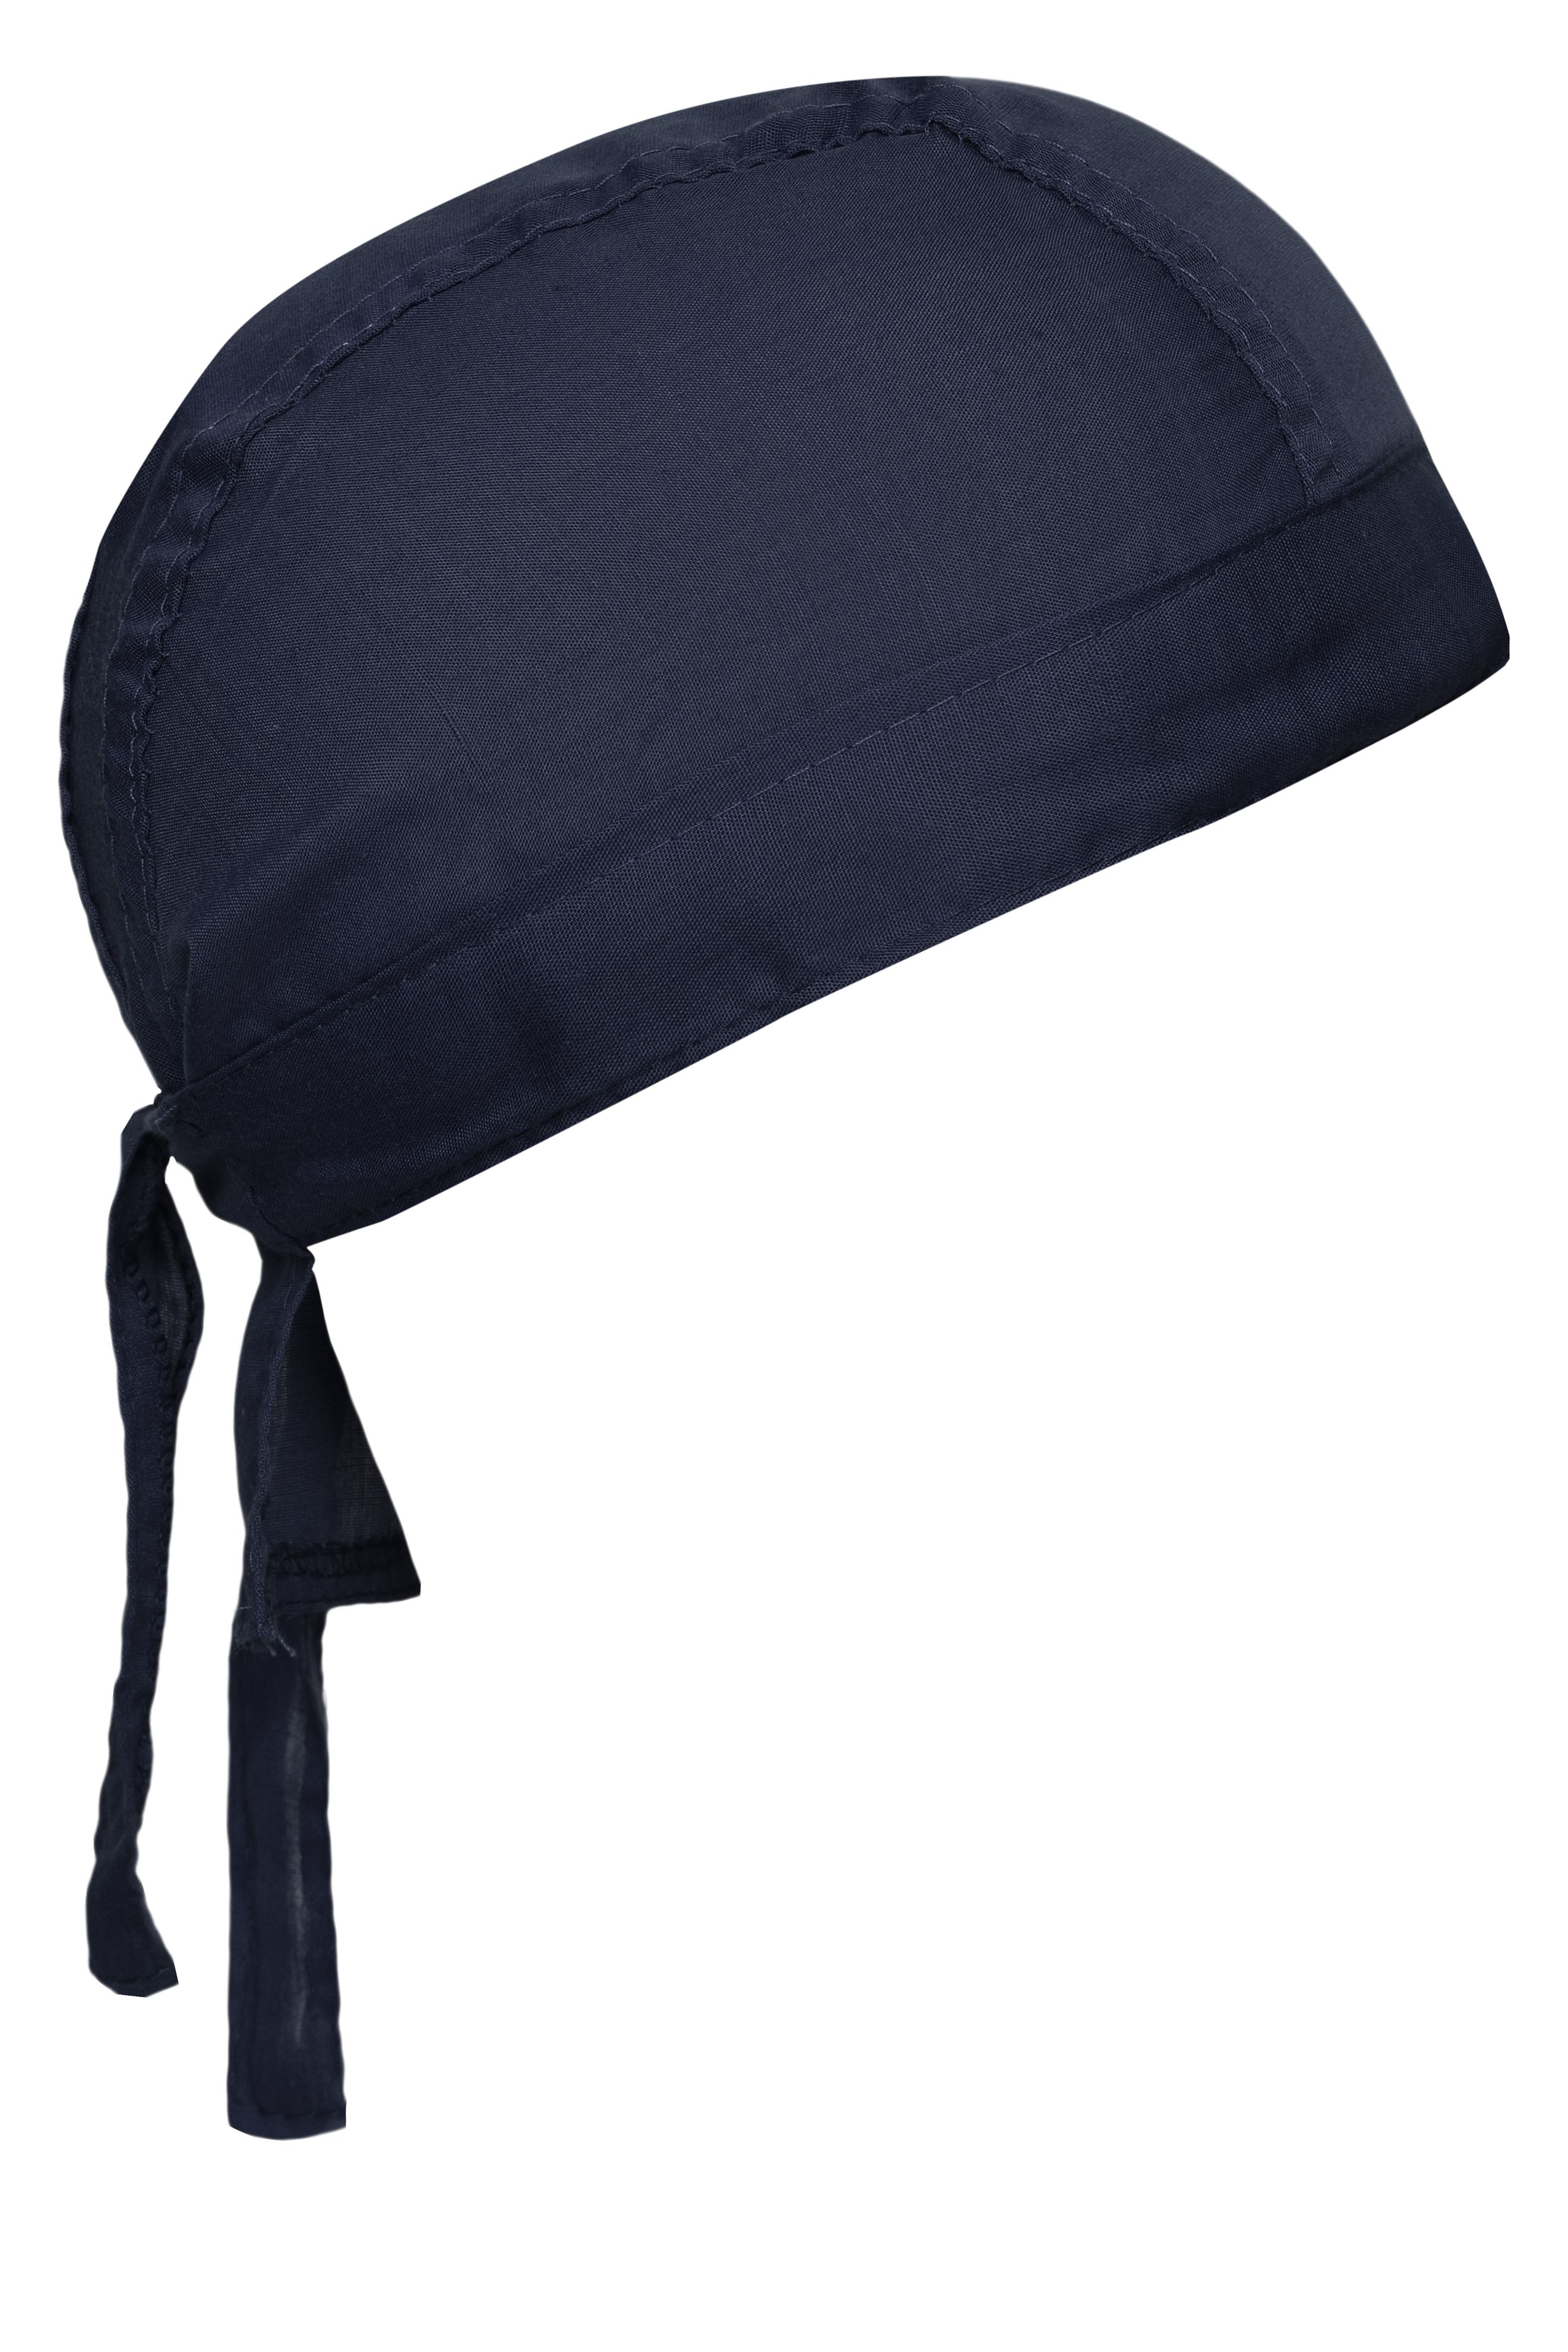 Bandana Hat MB041 Trendiges Kopftuch